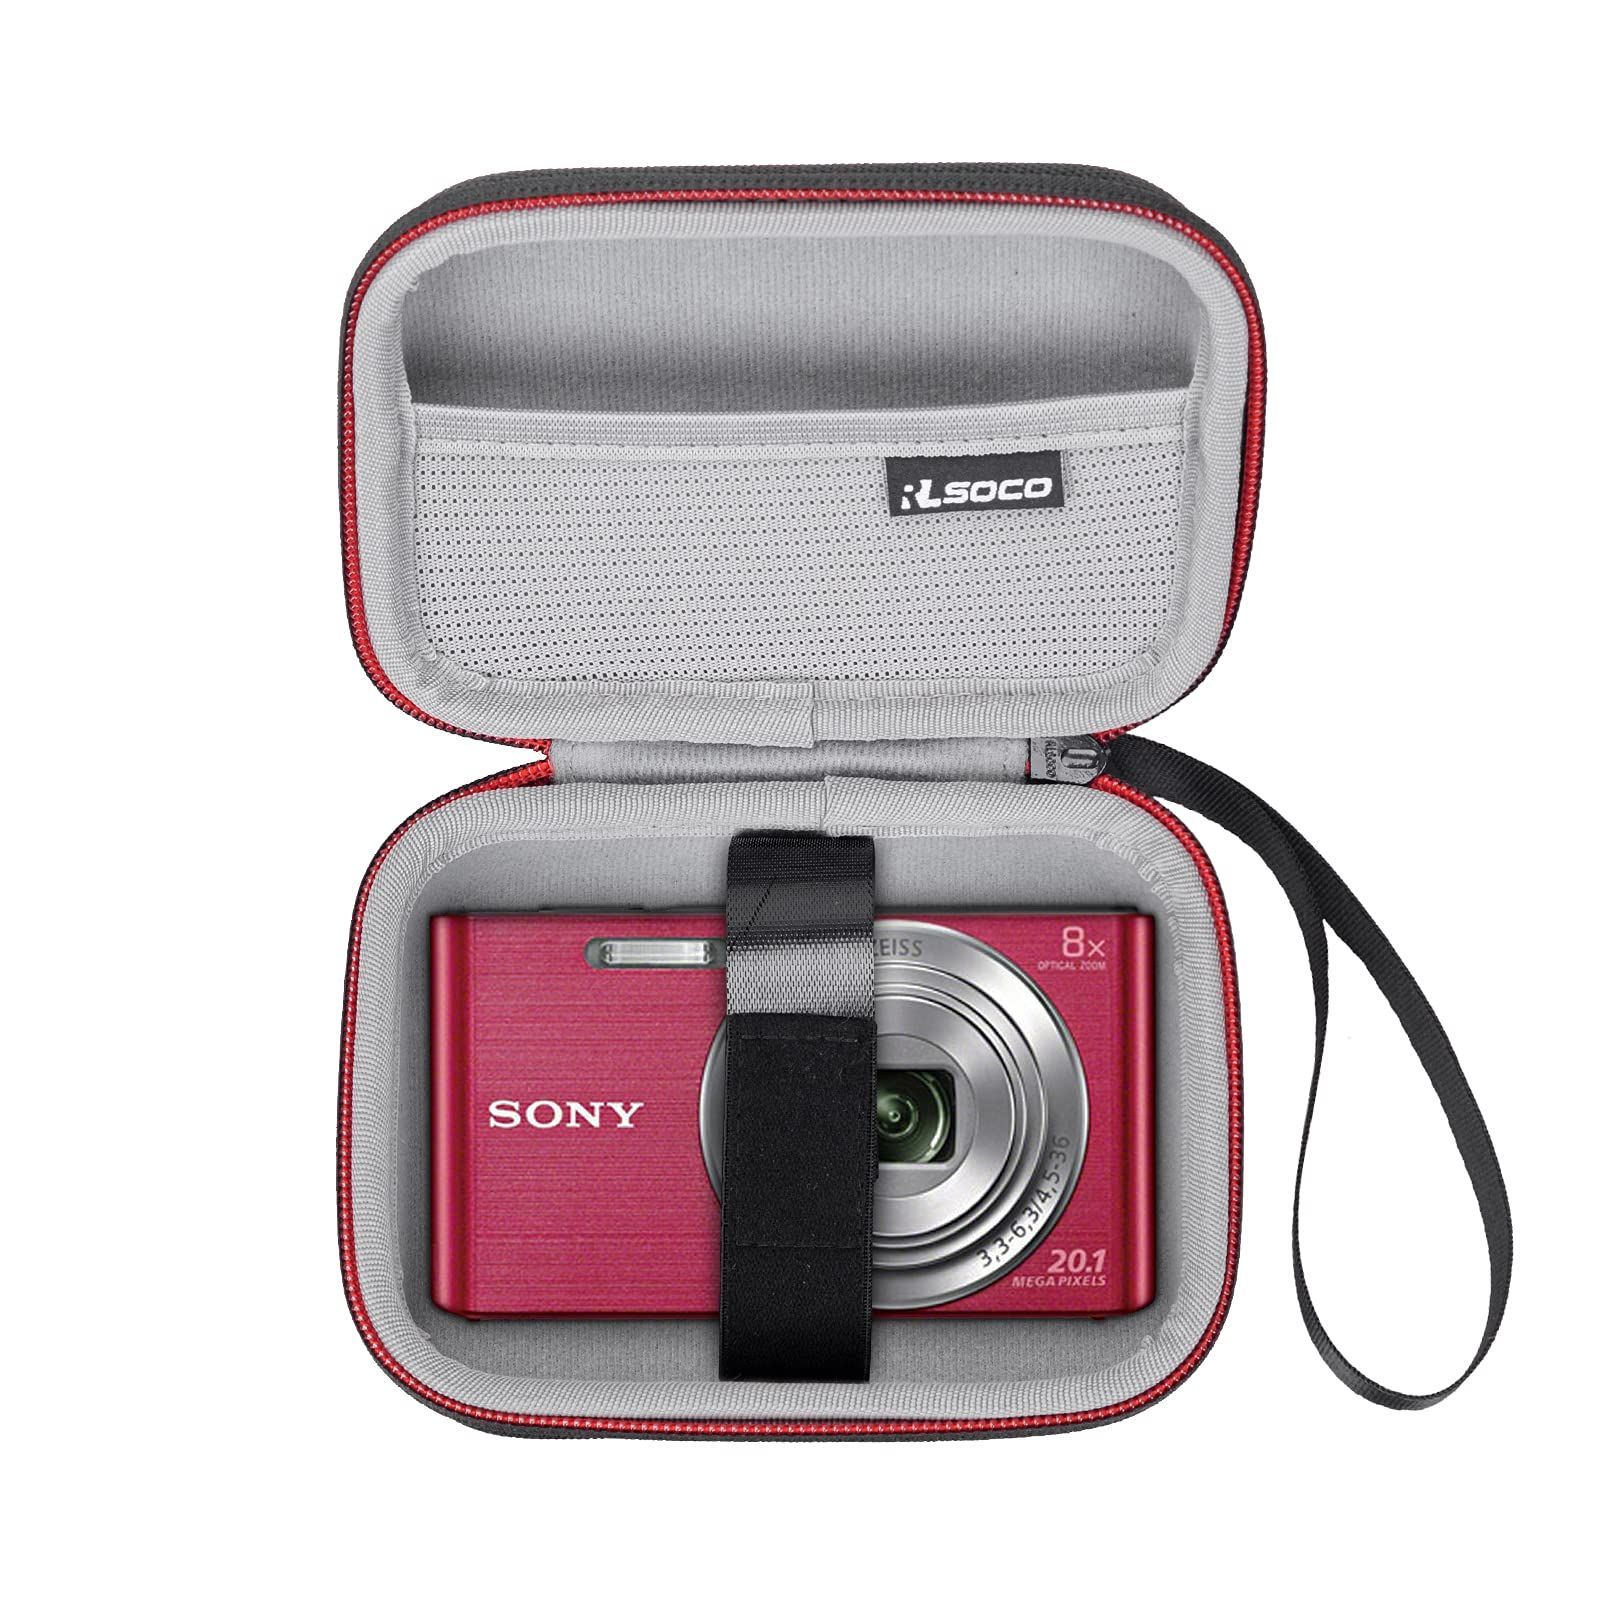 SONY DSC-WX500 デジタルカメラ 専用ケースホルダー付 - デジタルカメラ